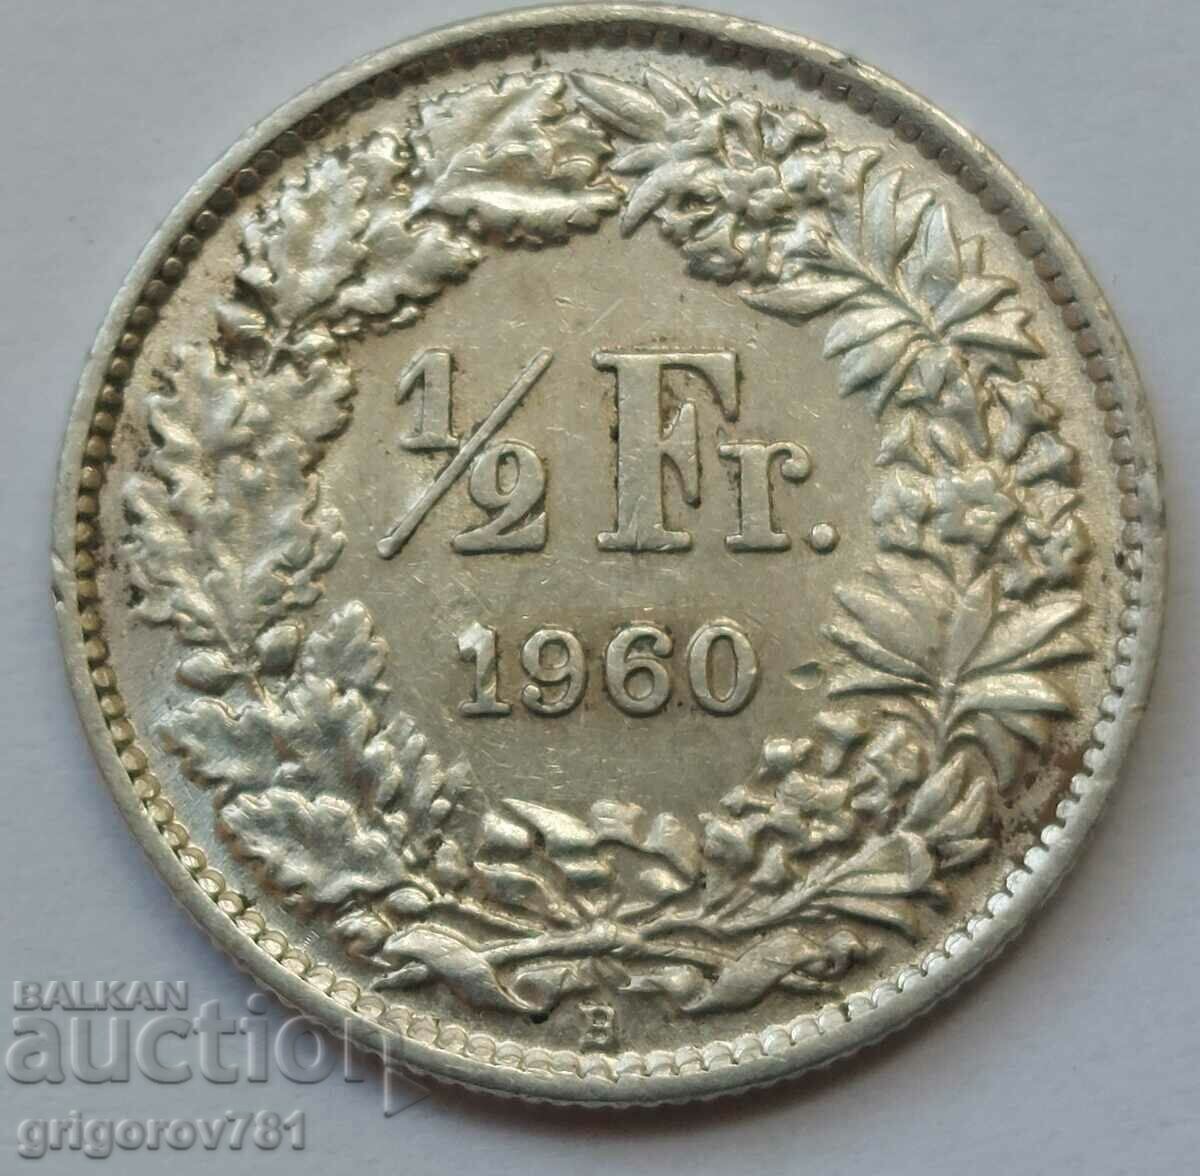 1/2 Franc Silver Switzerland 1960 B - Silver Coin #175